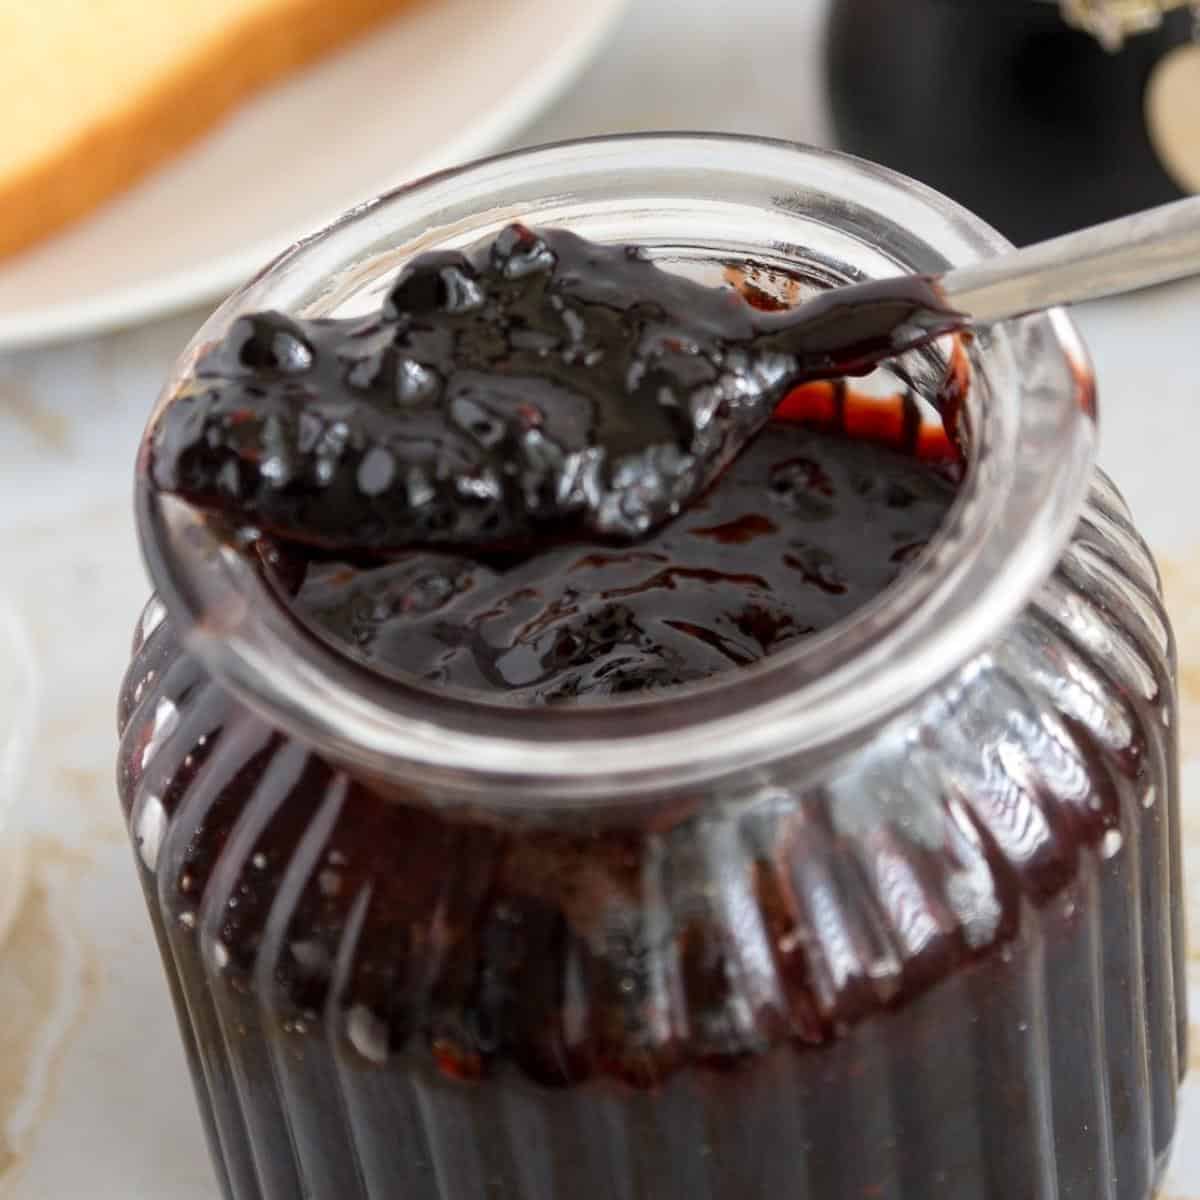 A spoon full of blueberry jam over a mason jar.